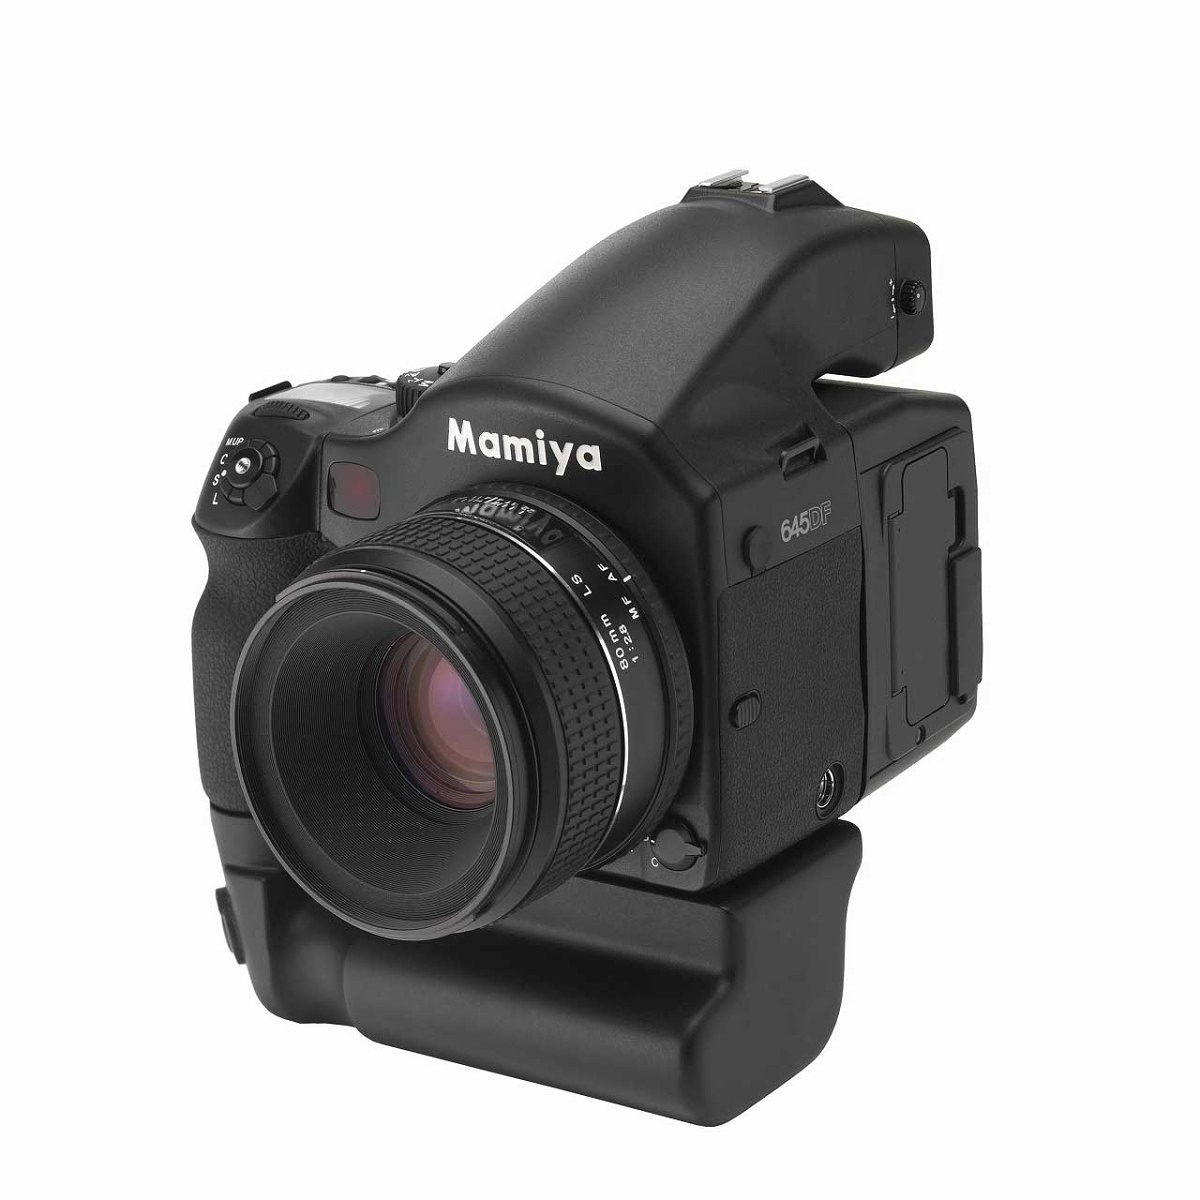 Mamiya 645DF (same as PhaseOne camera), shown with long-awaited vertical grip